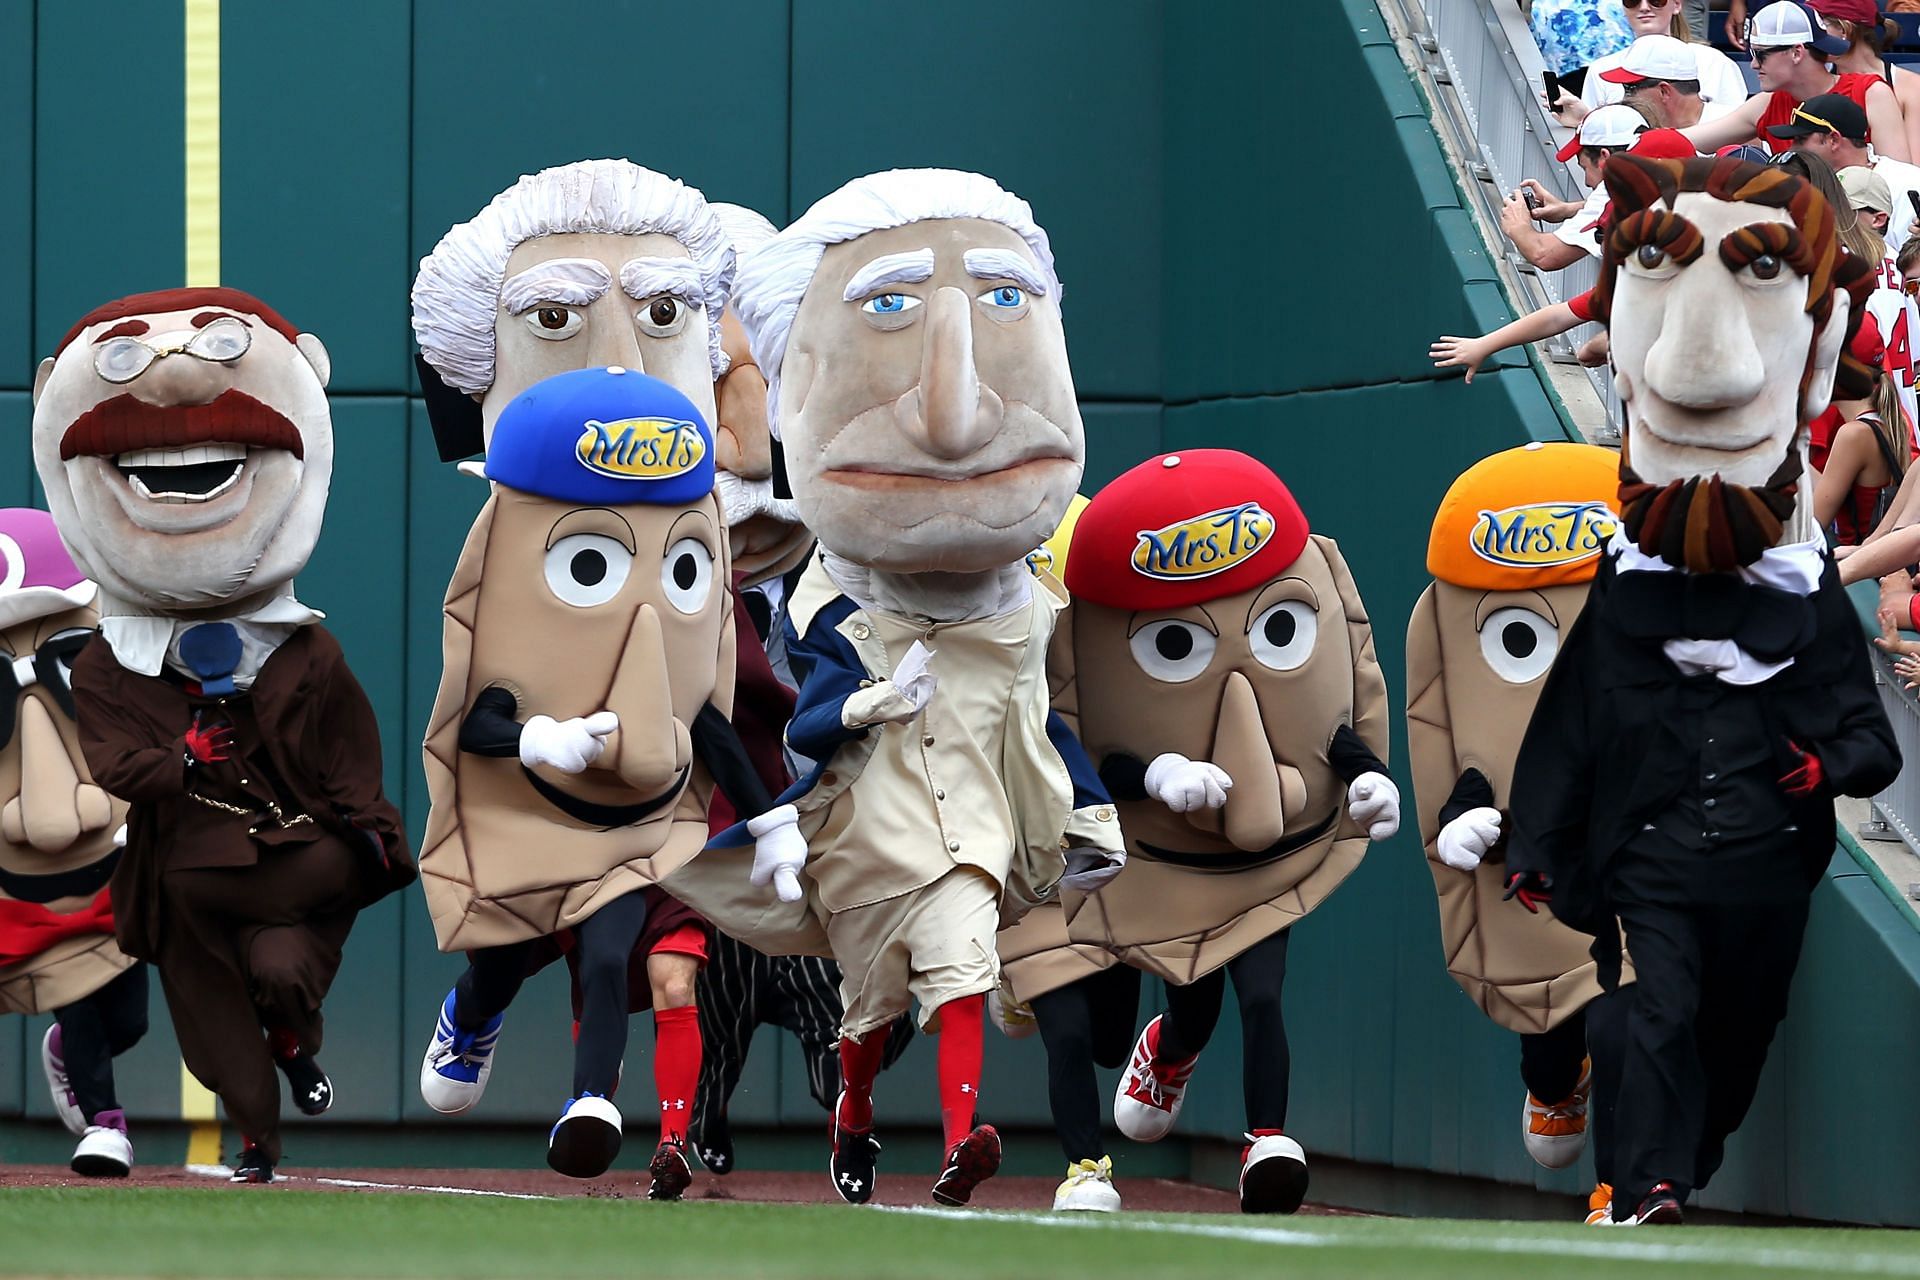 The Racing Presidents, Washington Nationals baseball team mascots